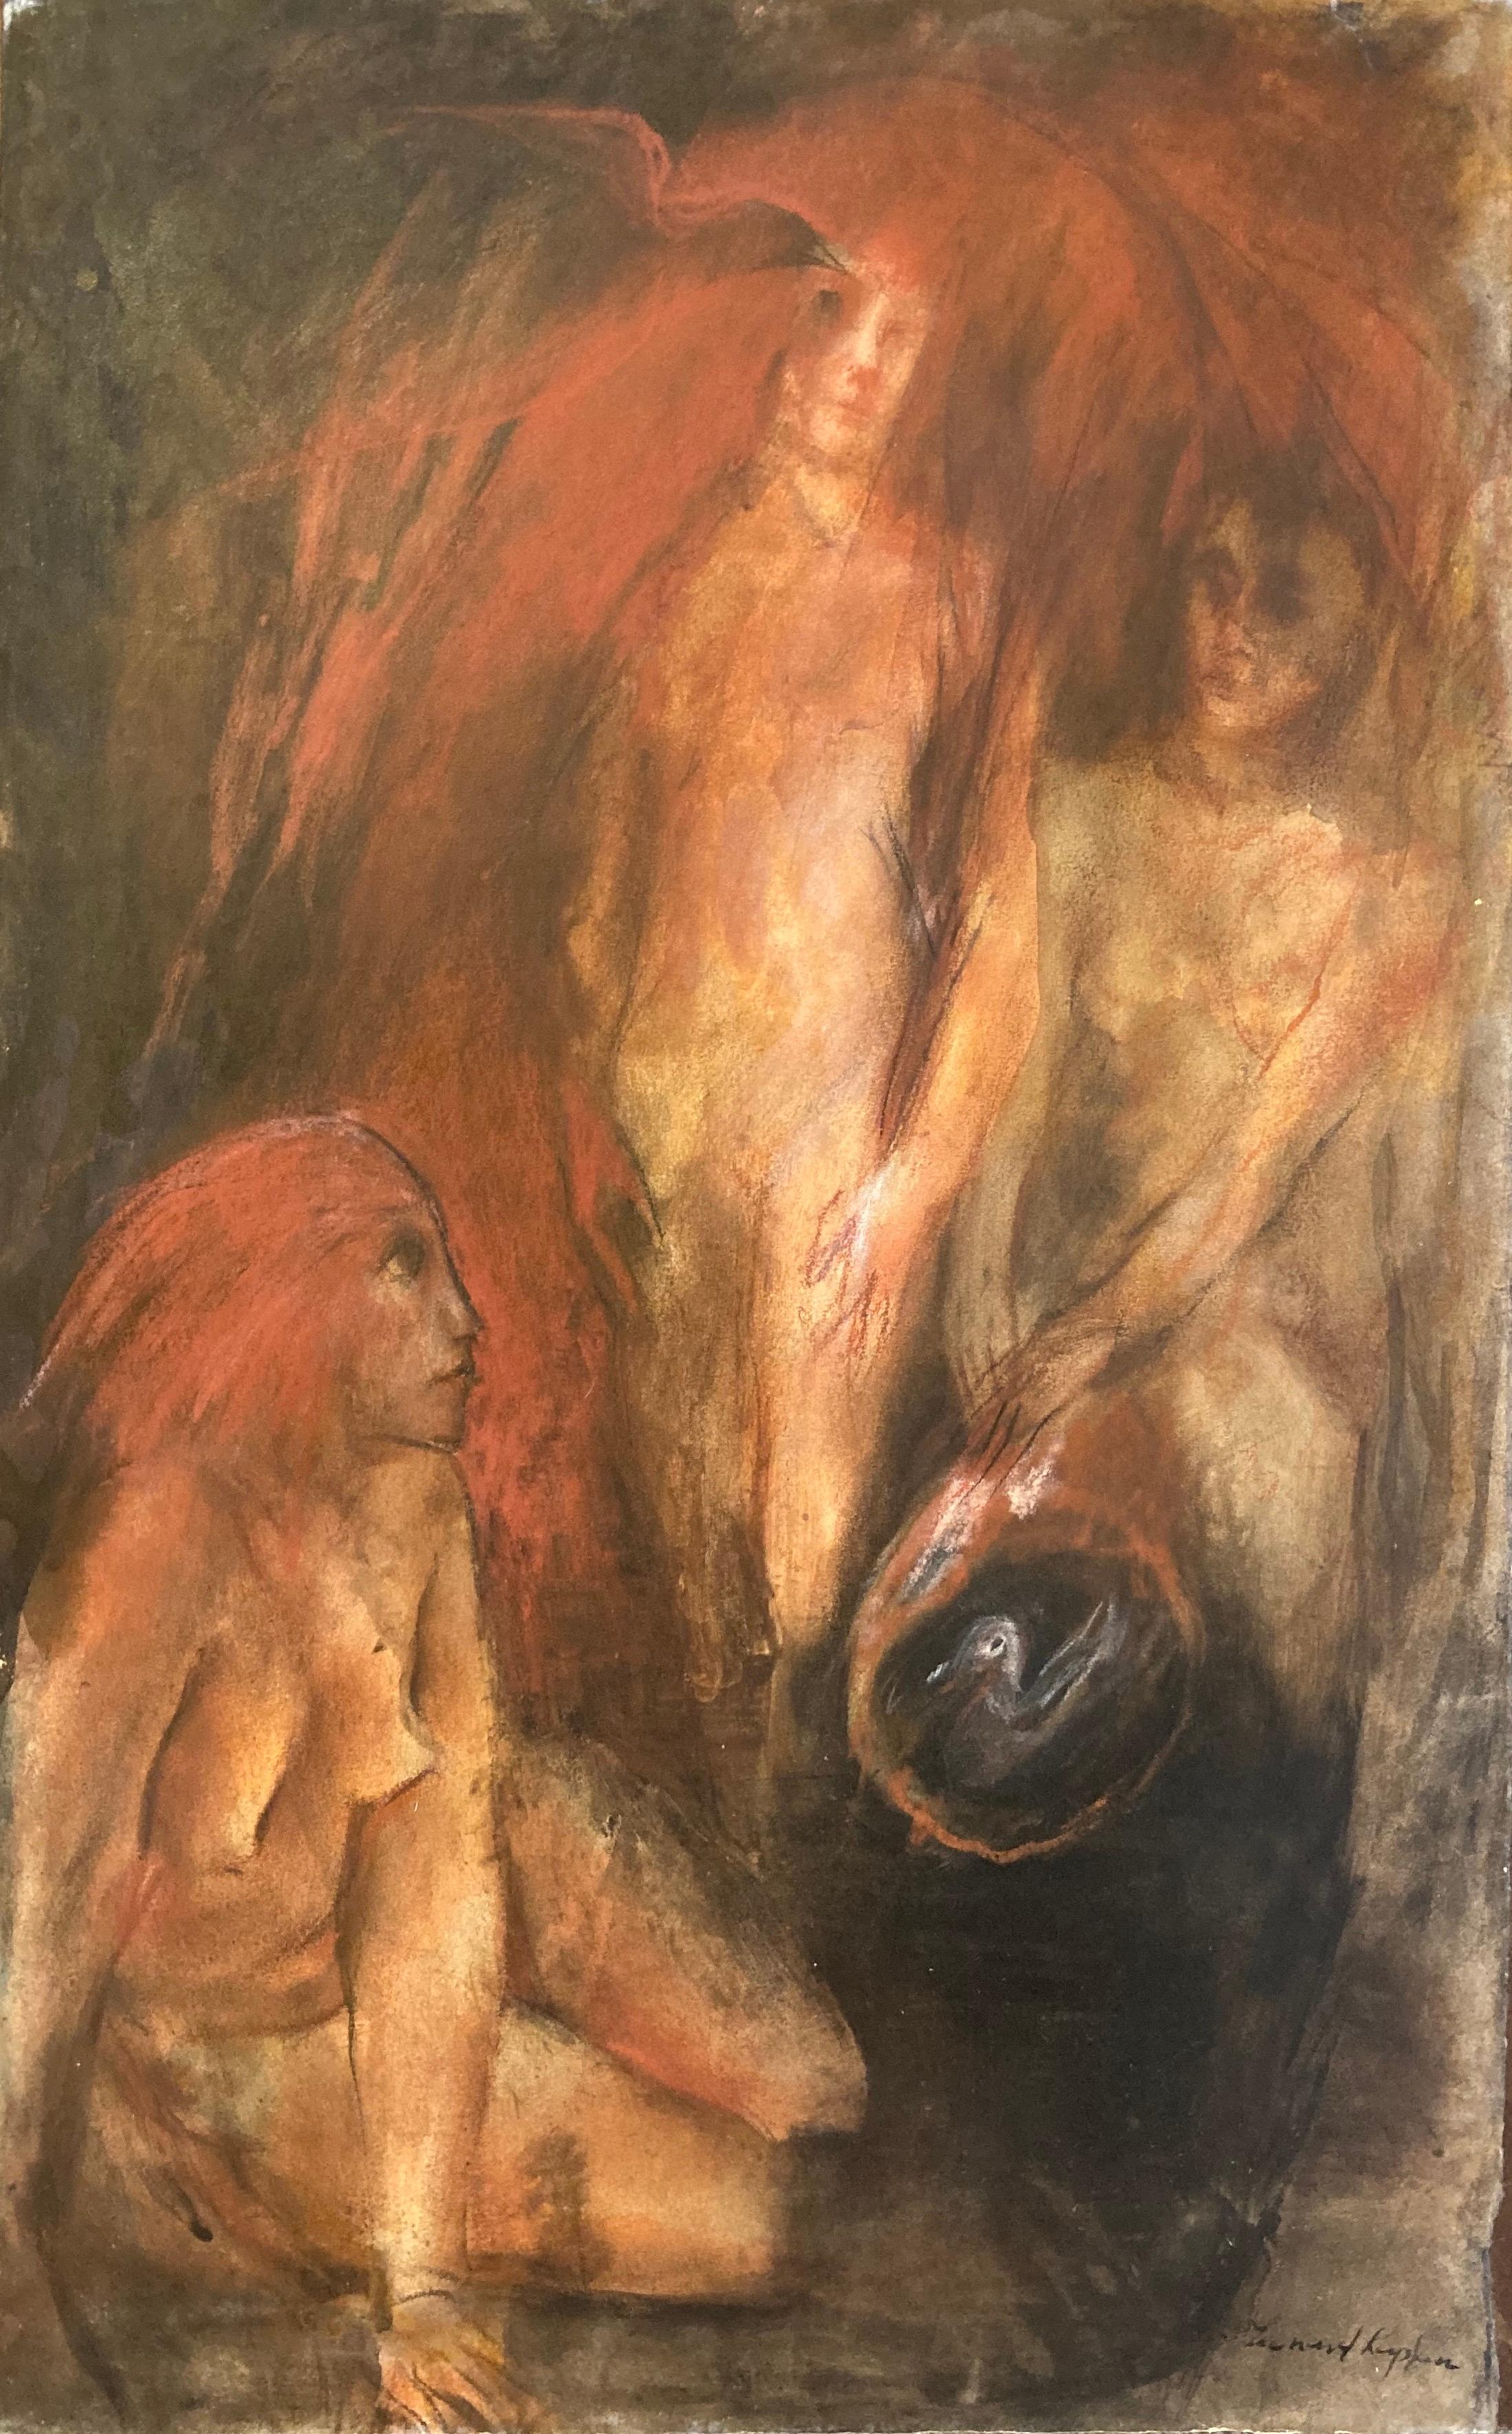 'Surrealistic Nude Figures, ' by Leonard Kaplan, Painting, c. 1960s